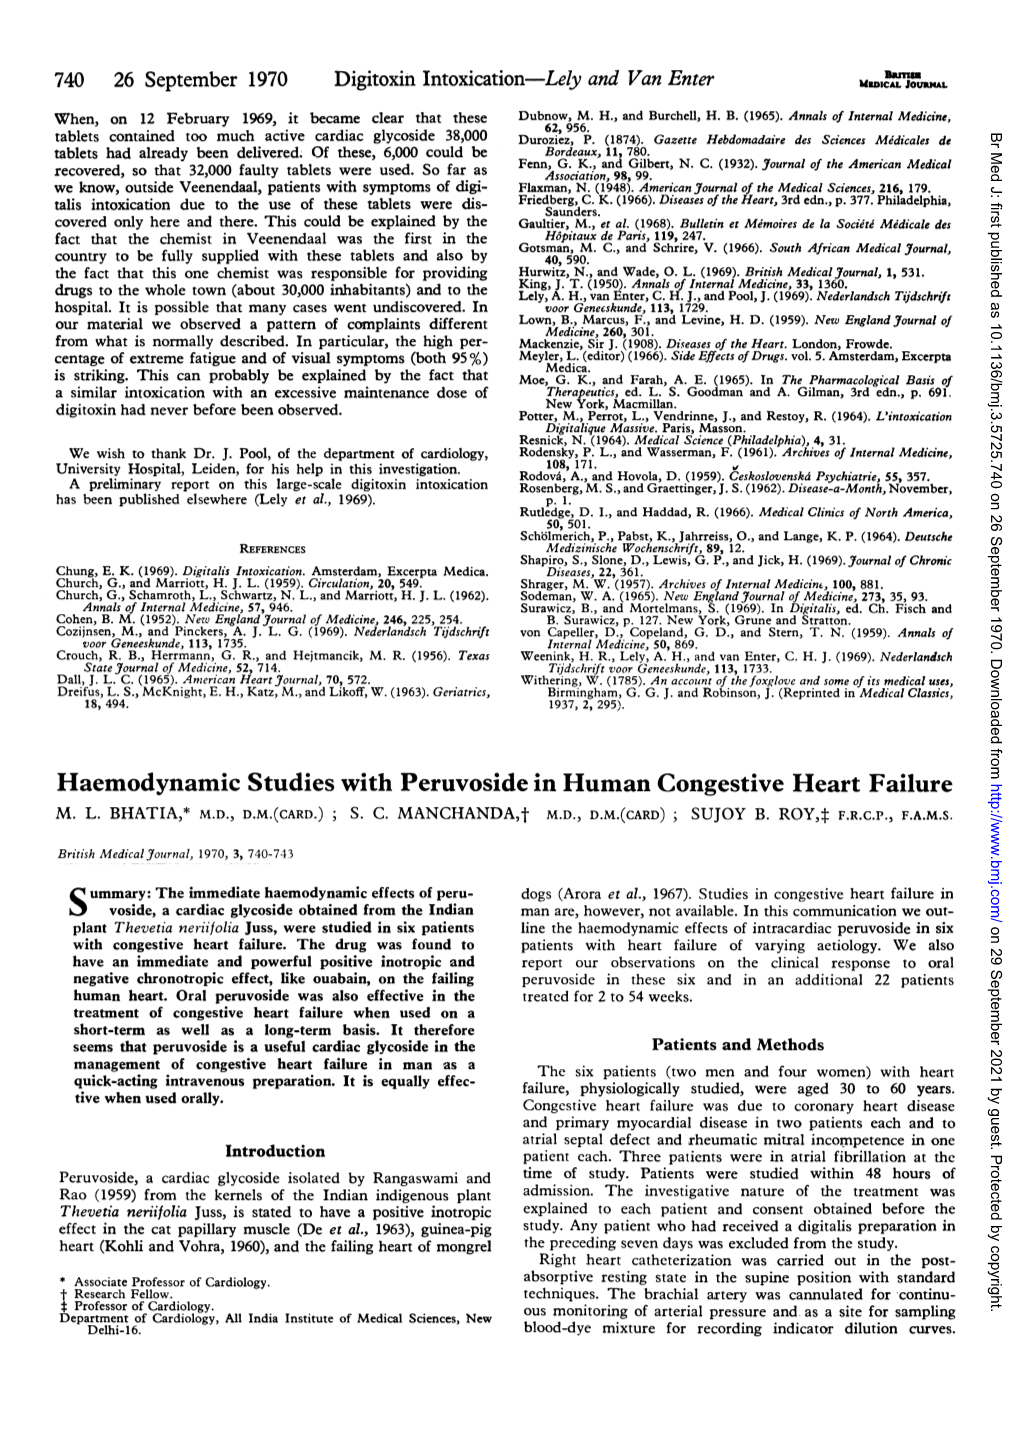 Haemodynamic Studies with Peruvoside in Human Congestive Heart Failure M